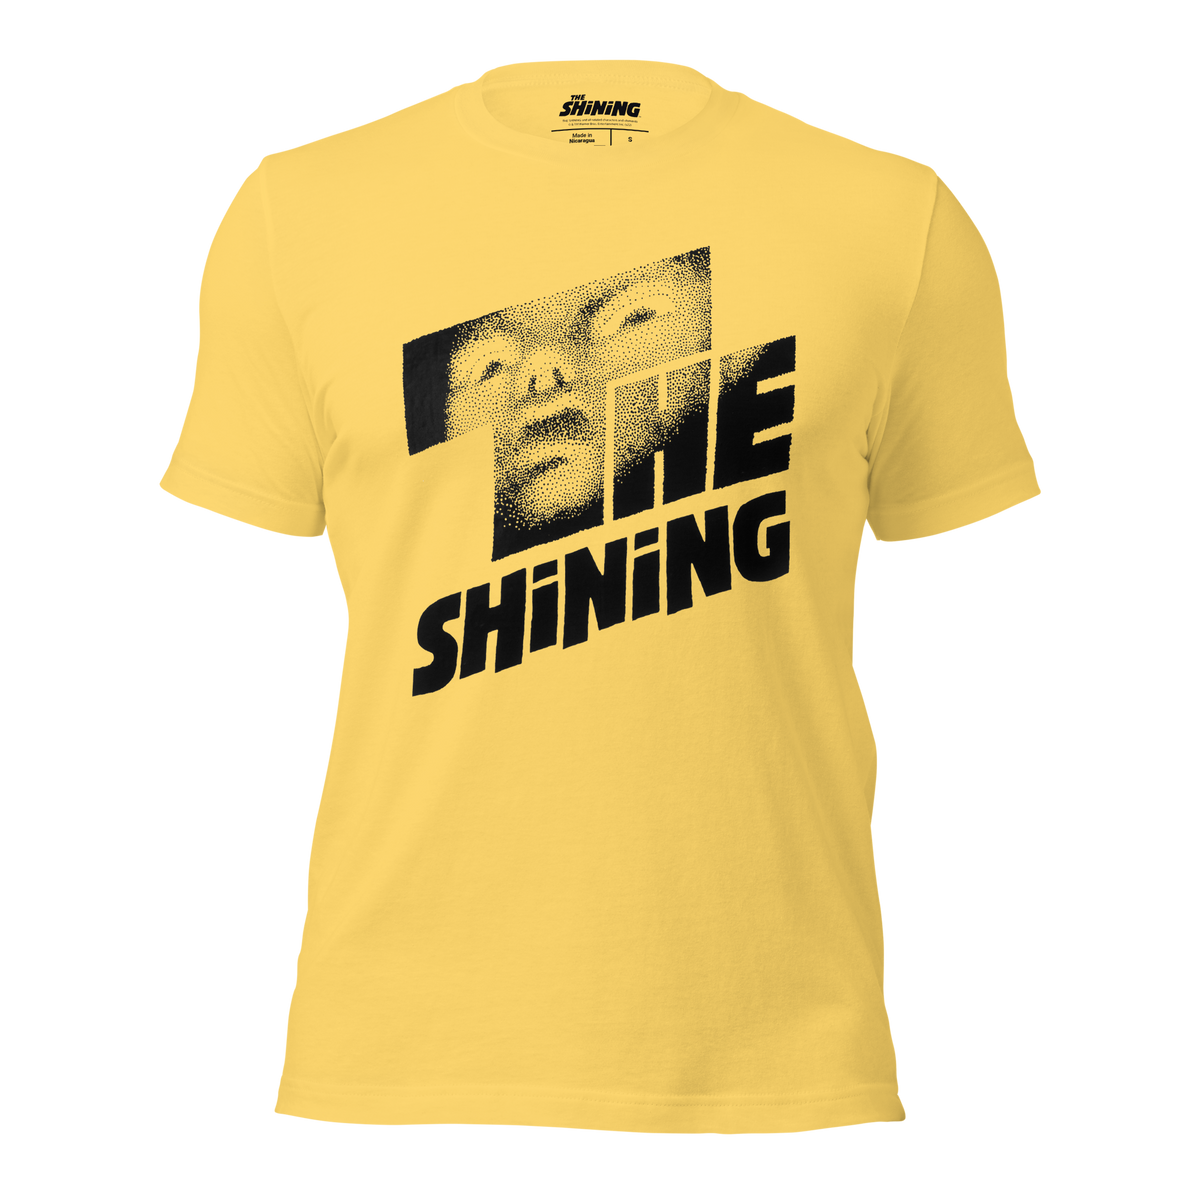 The Shining - Saul Bass Title Treatment  - Yellow T-Shirt